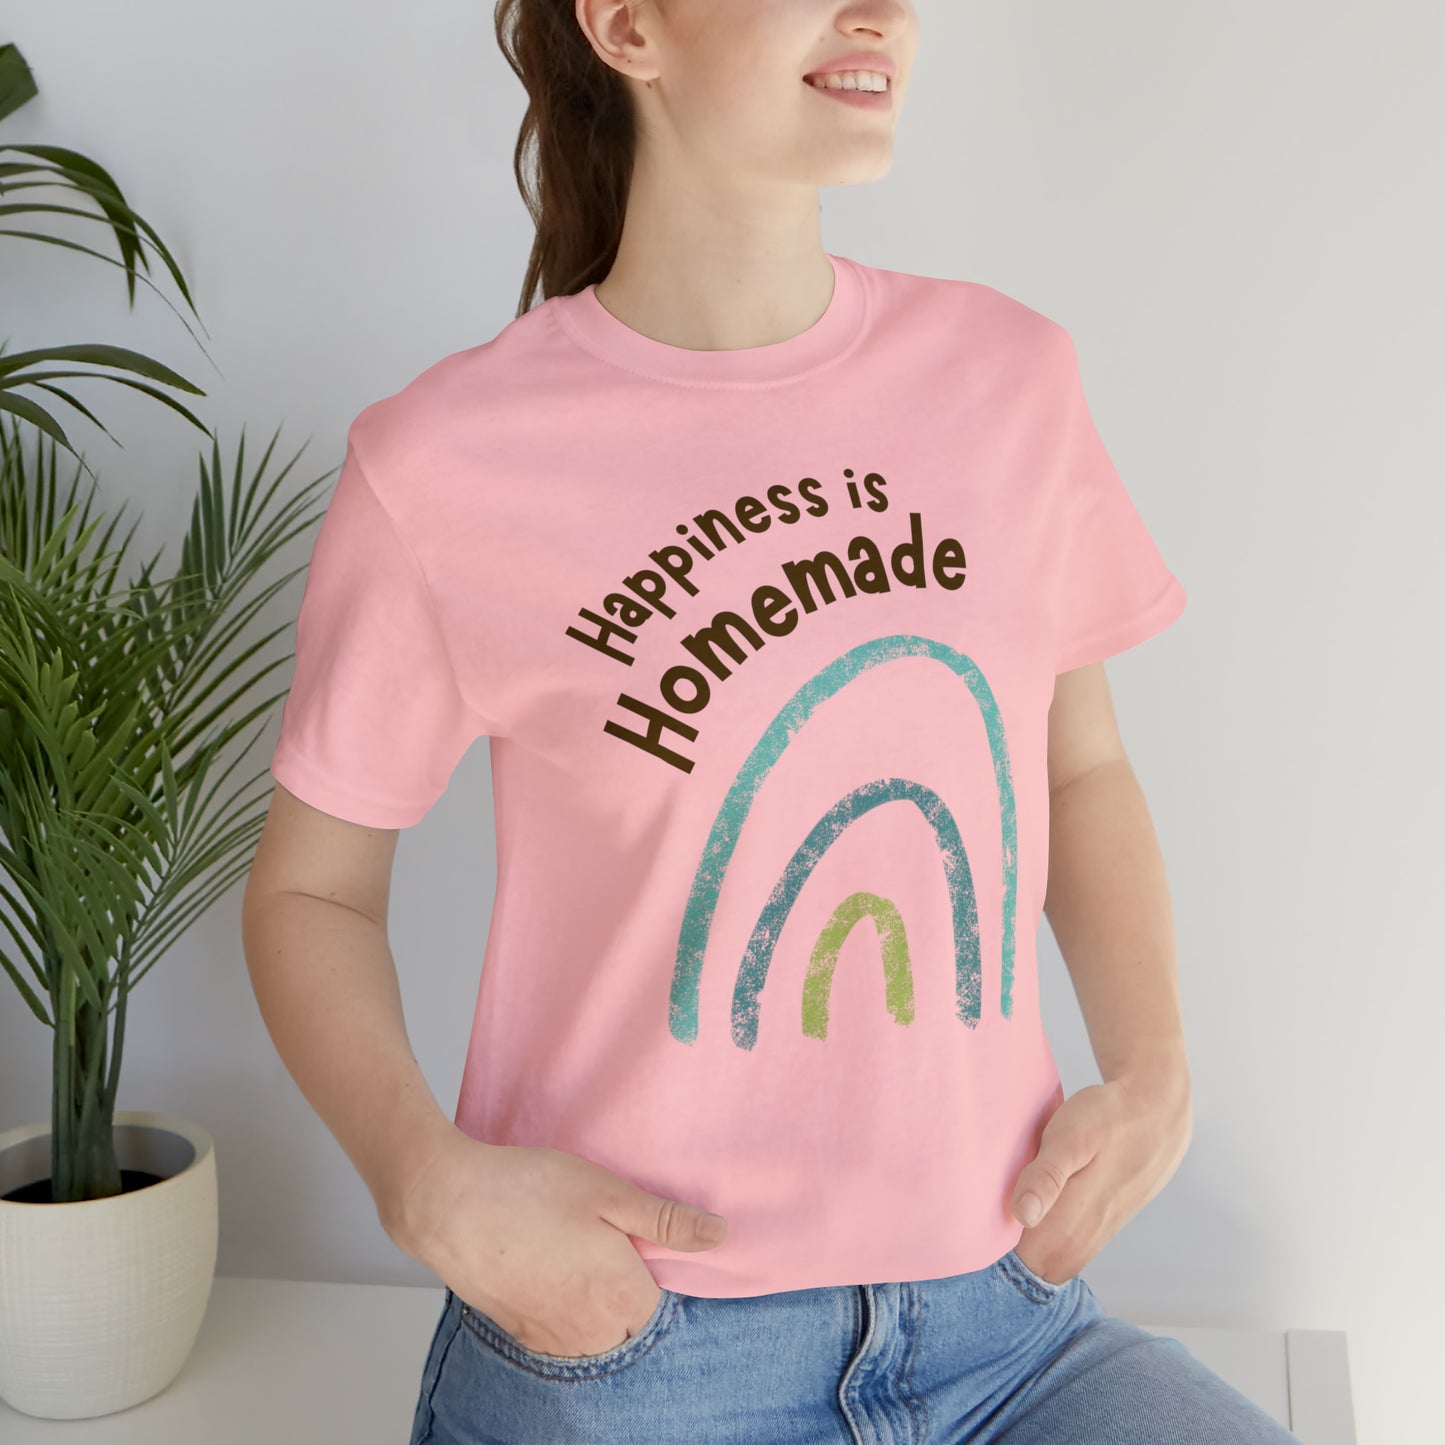 Happiness Is Homemade Shirt